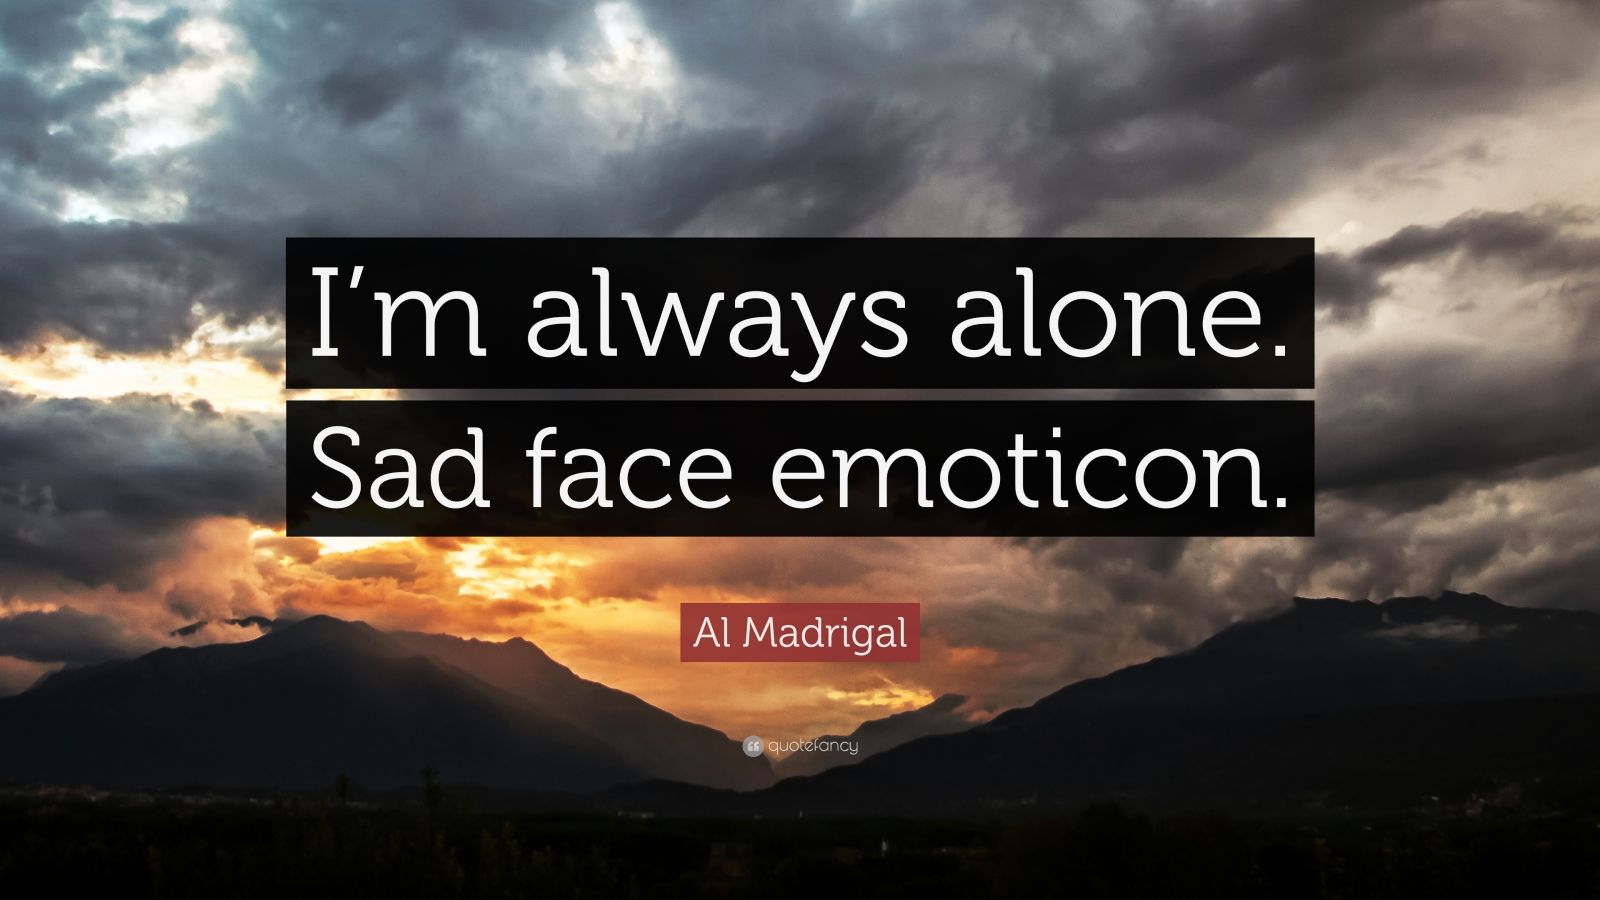 Al Madrigal Quote: "I'm always alone. Sad face emoticon ...